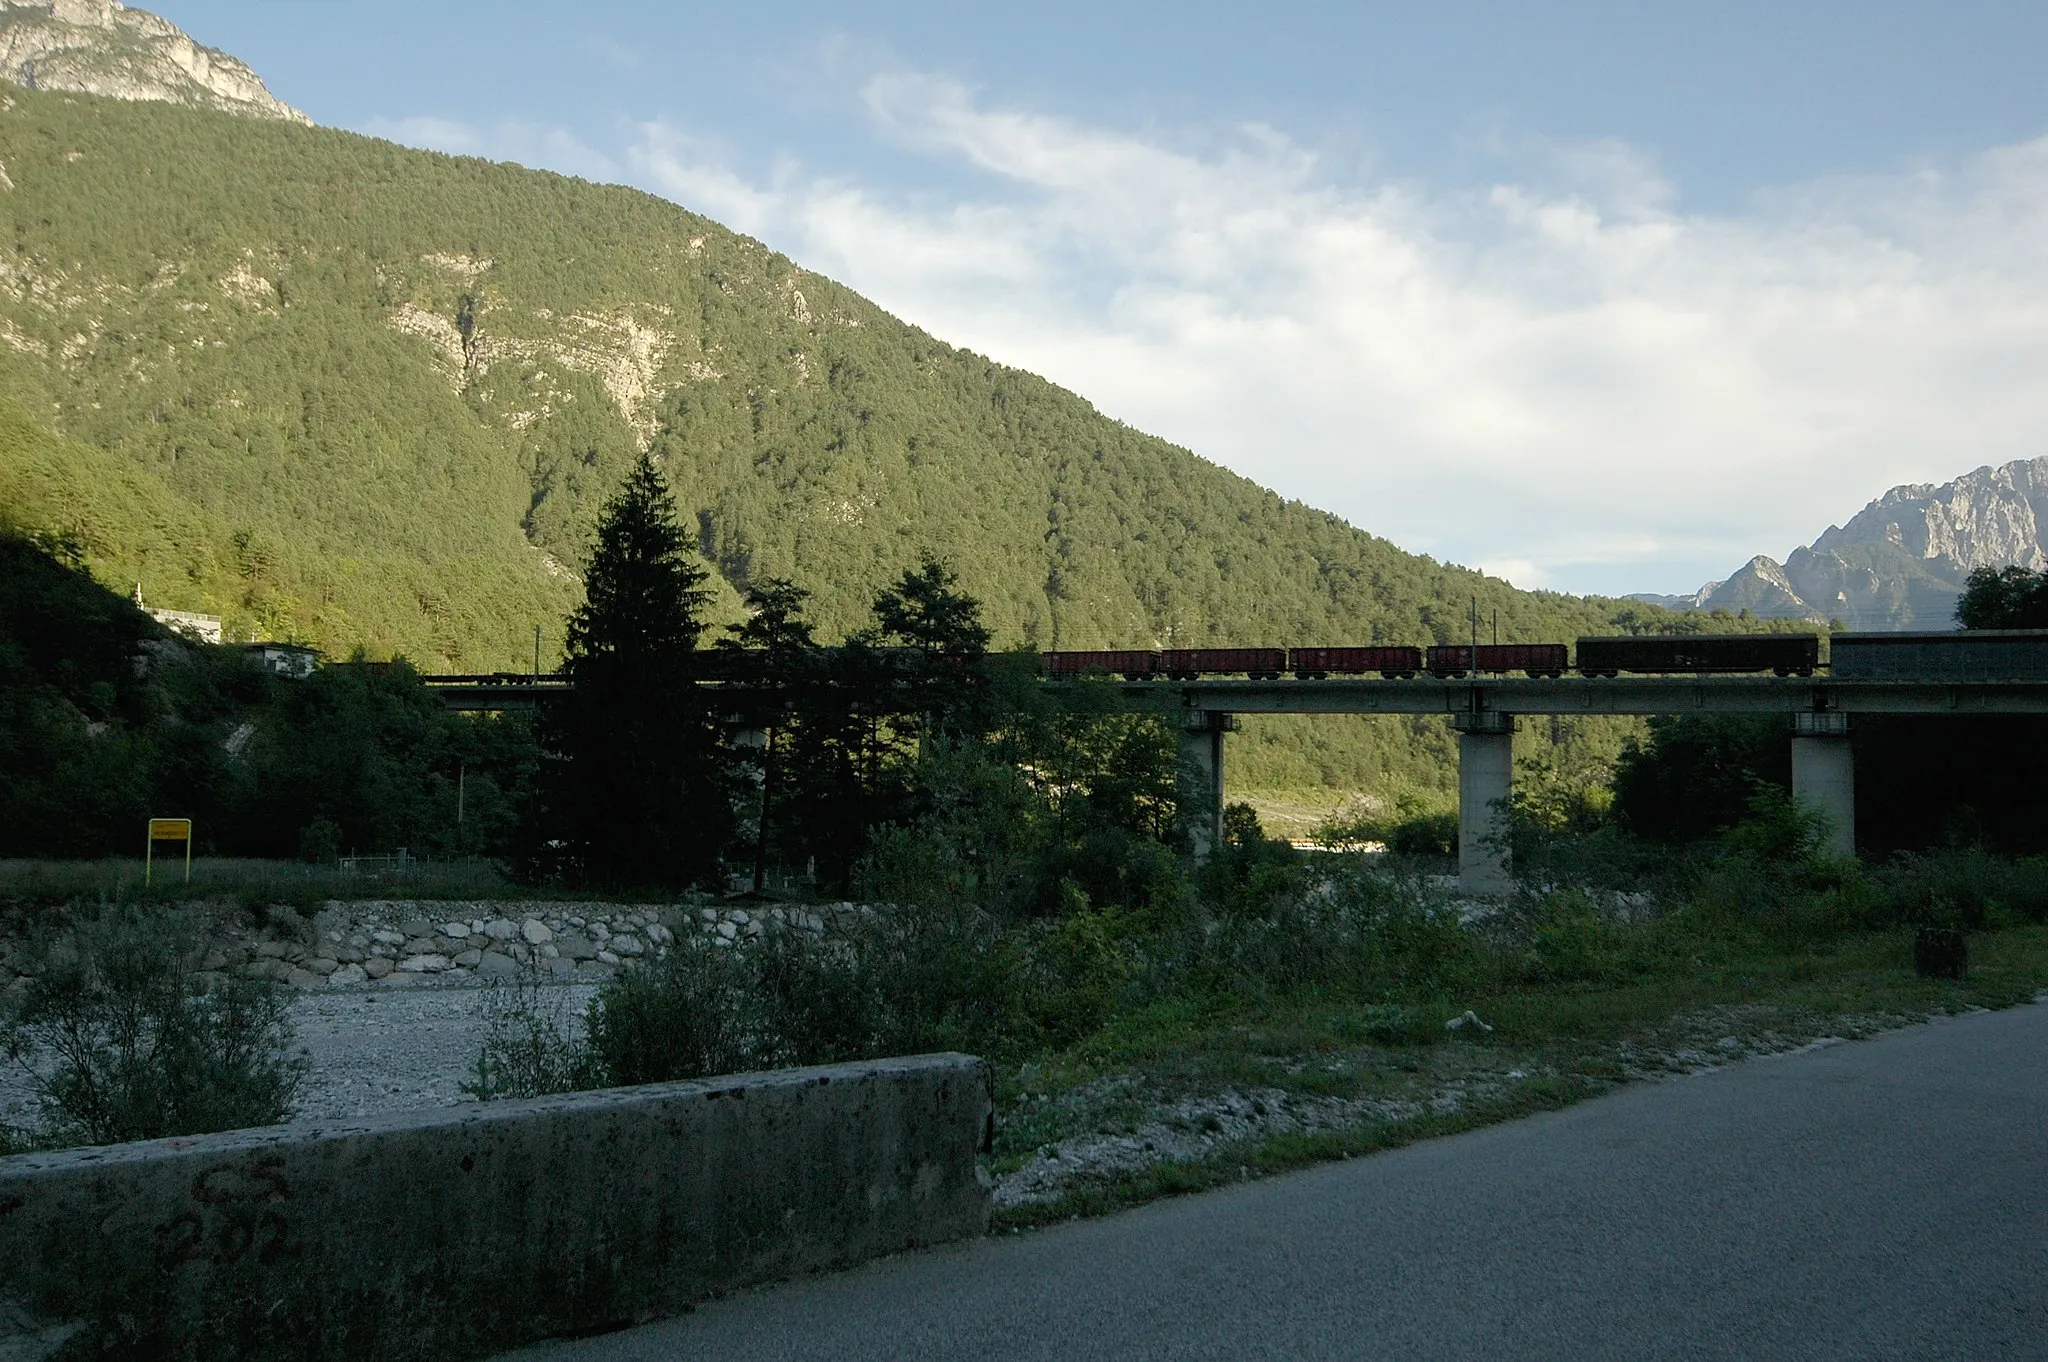 Photo showing: Aupa valley in the community Moggio Udinese, Friuli-Venezia Giulia, Italy